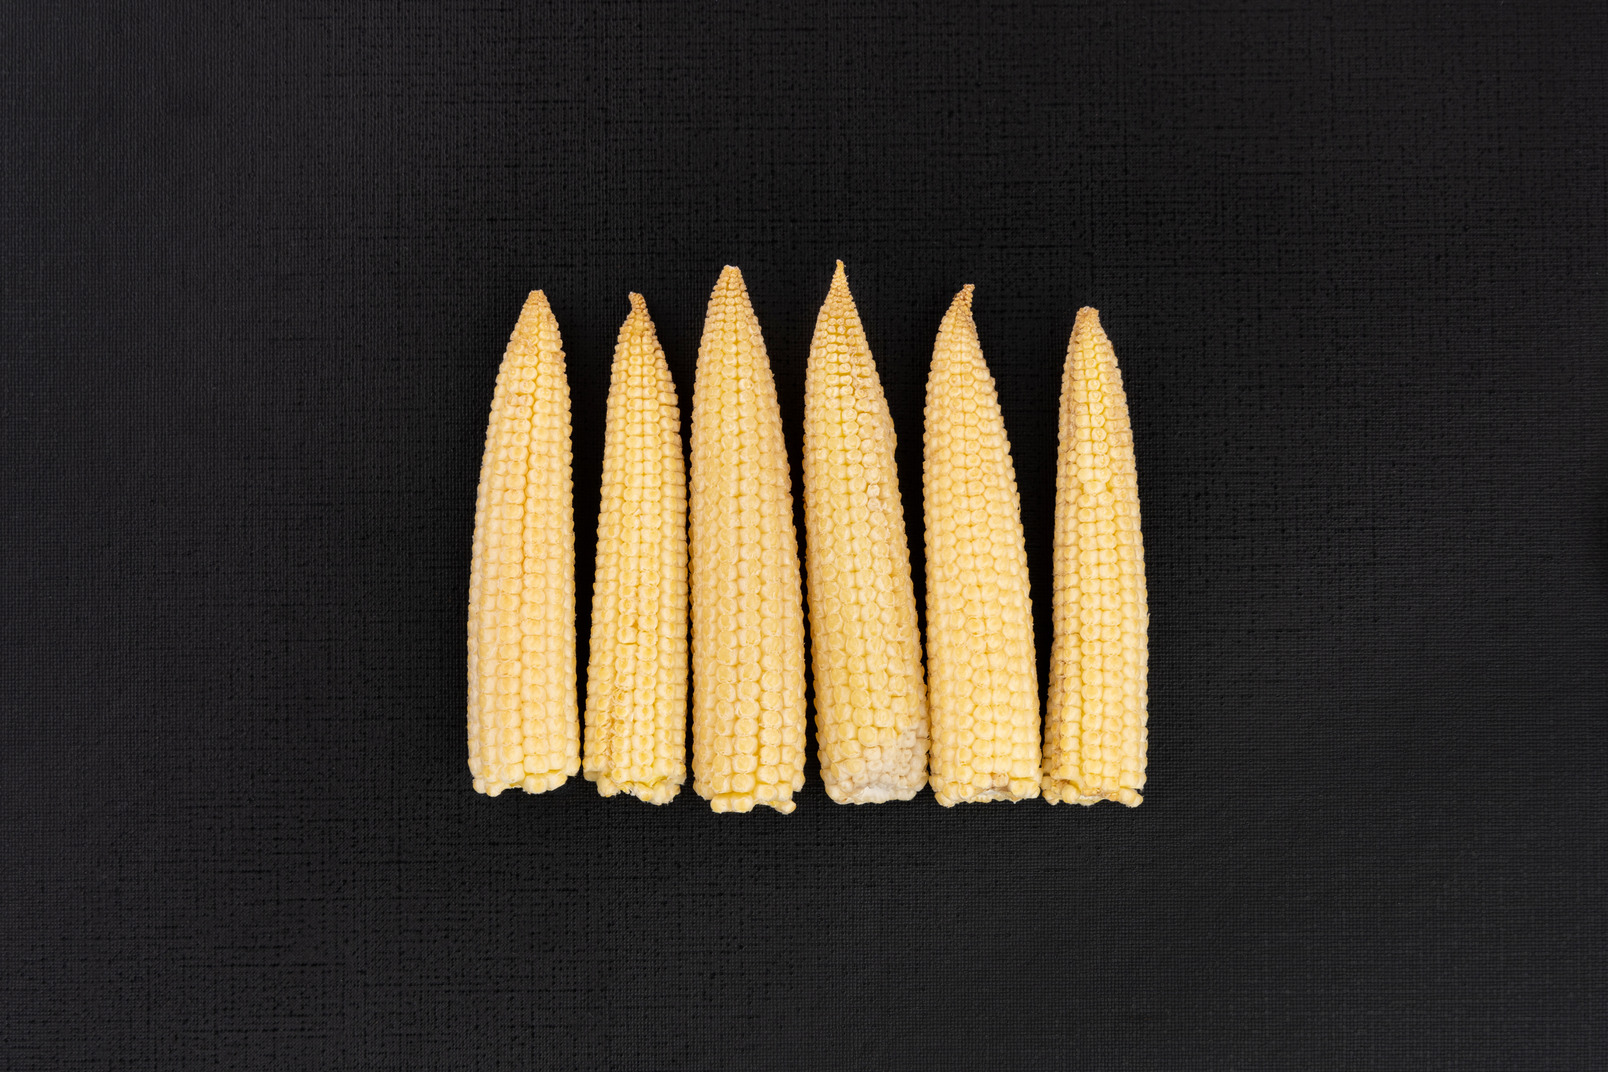 Baby corns on black background